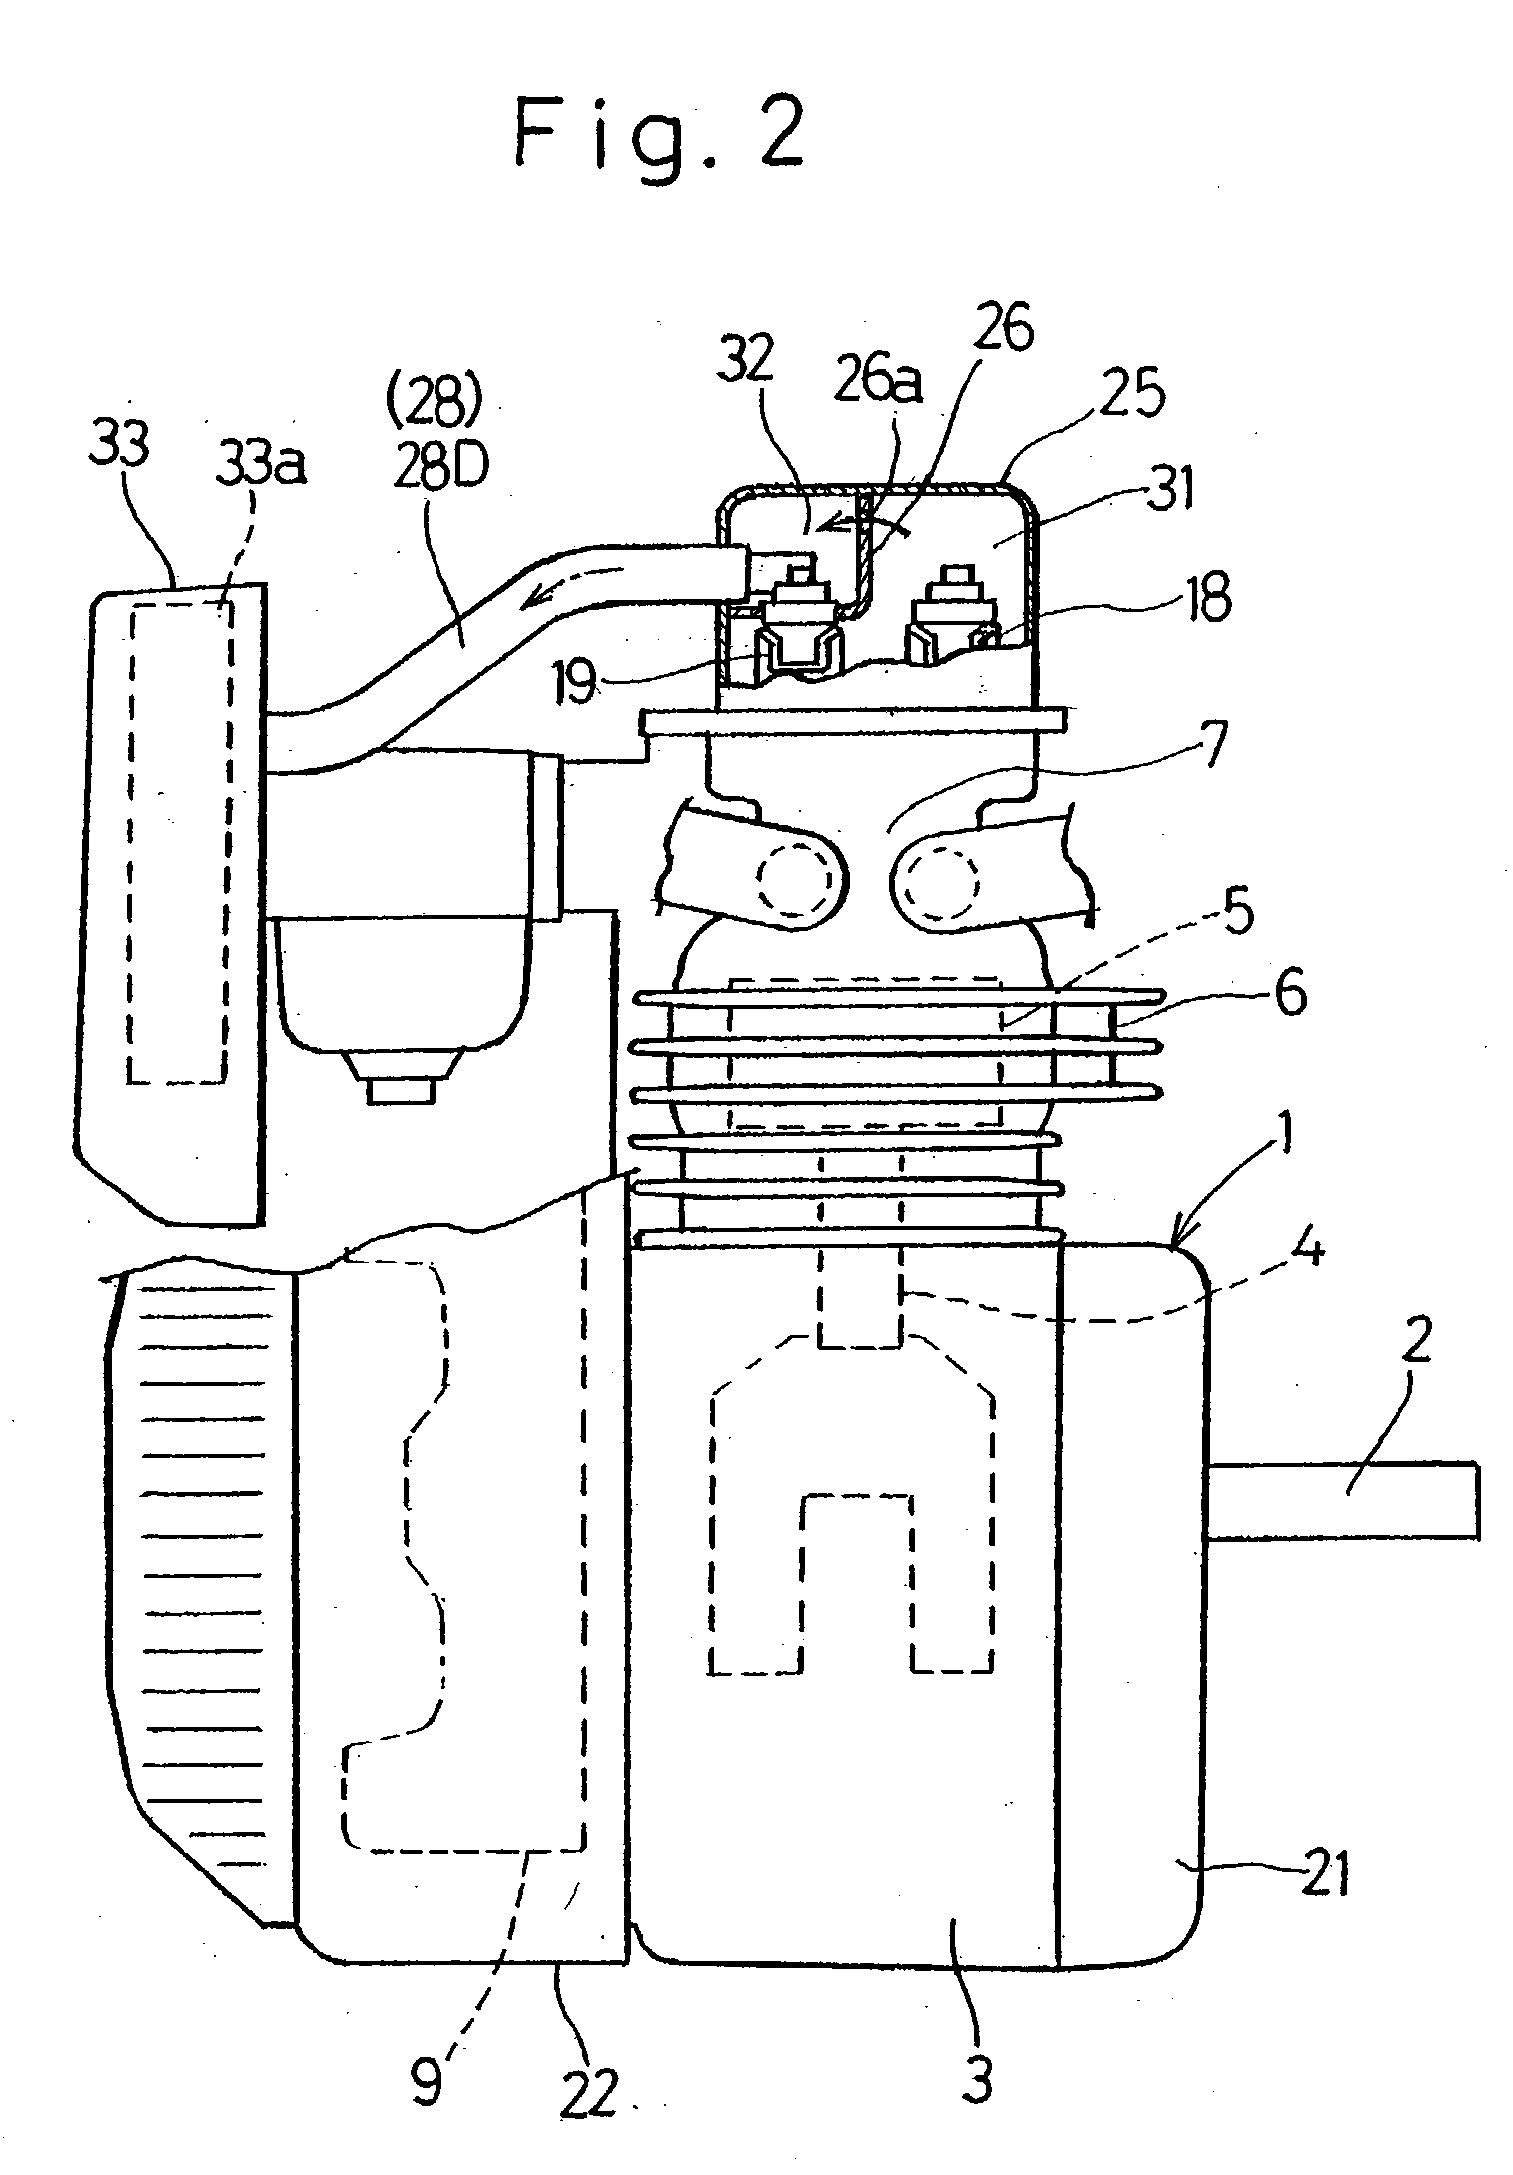 Four-cycle overhead valve engine